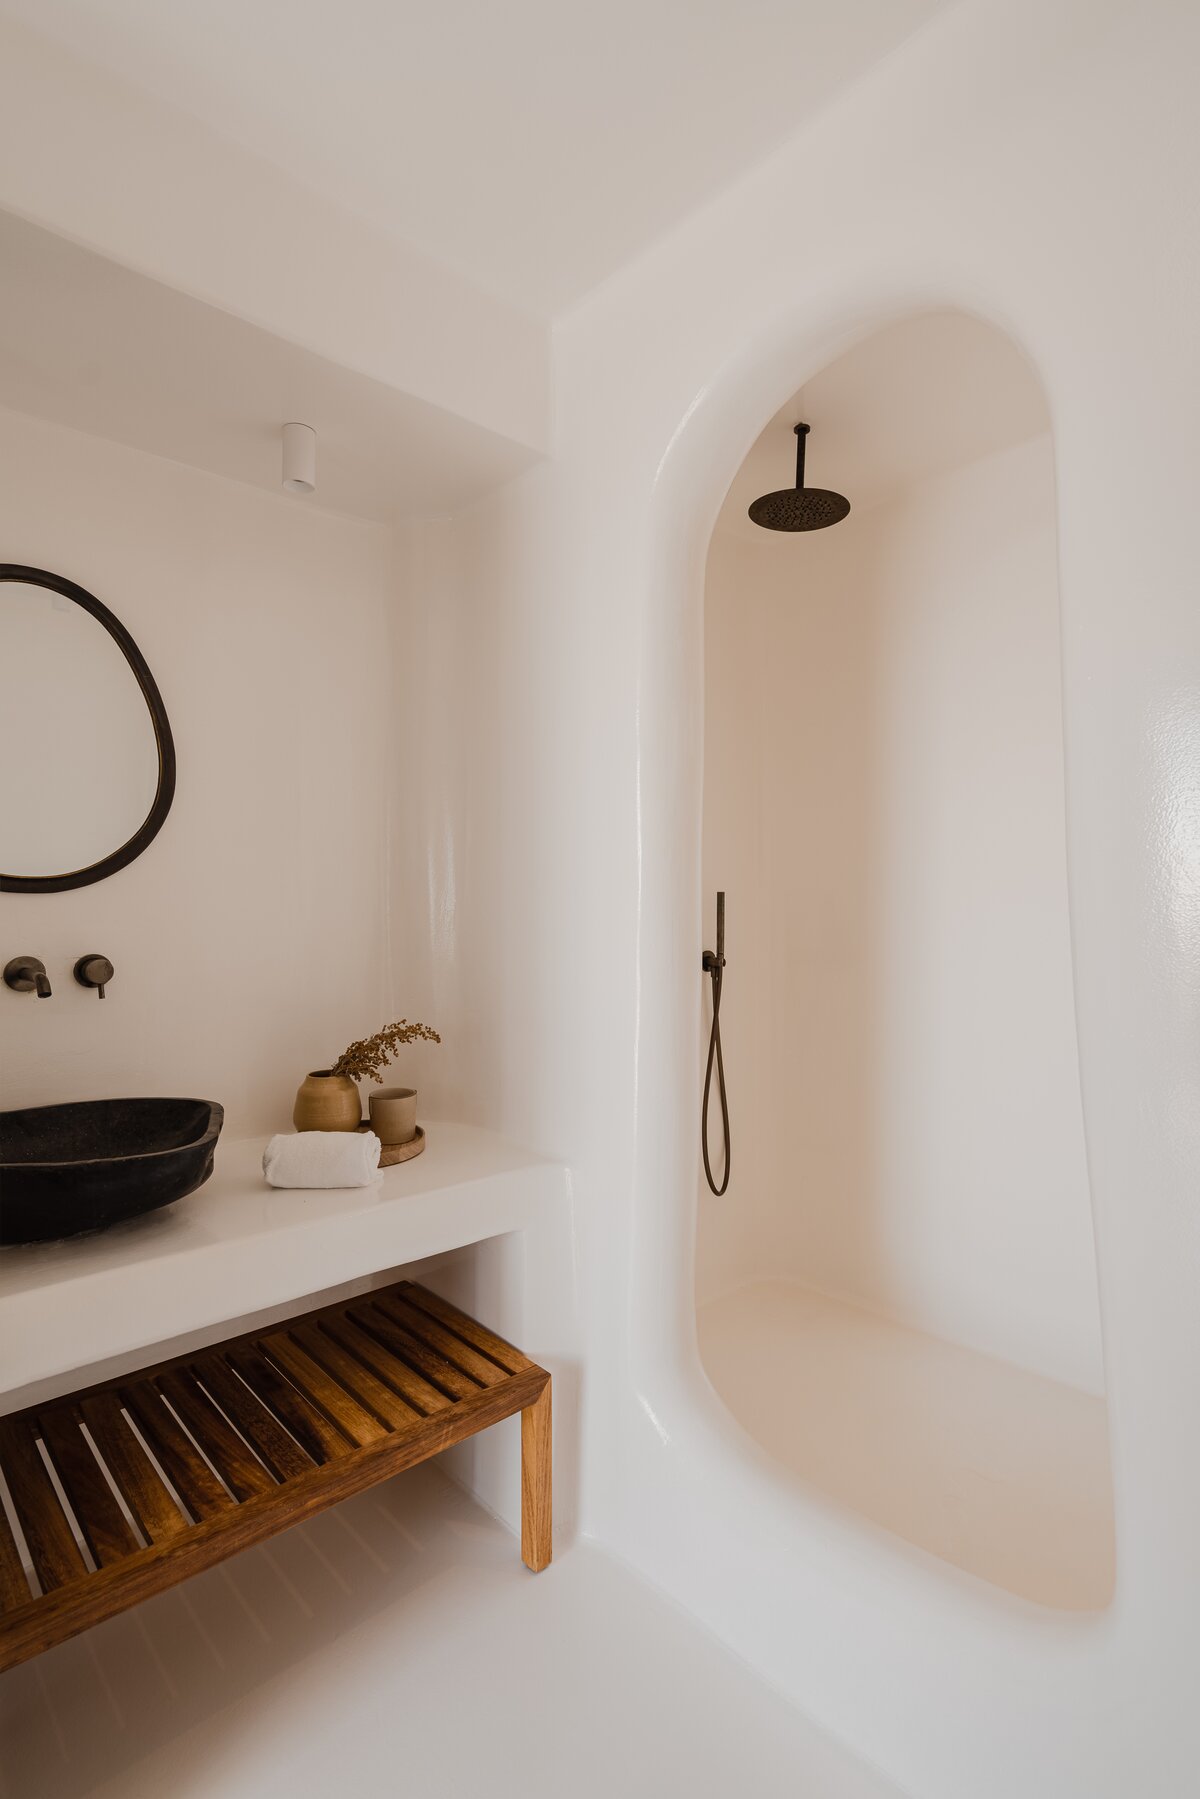 Nobu Hotel Santorini, guest room bathroom